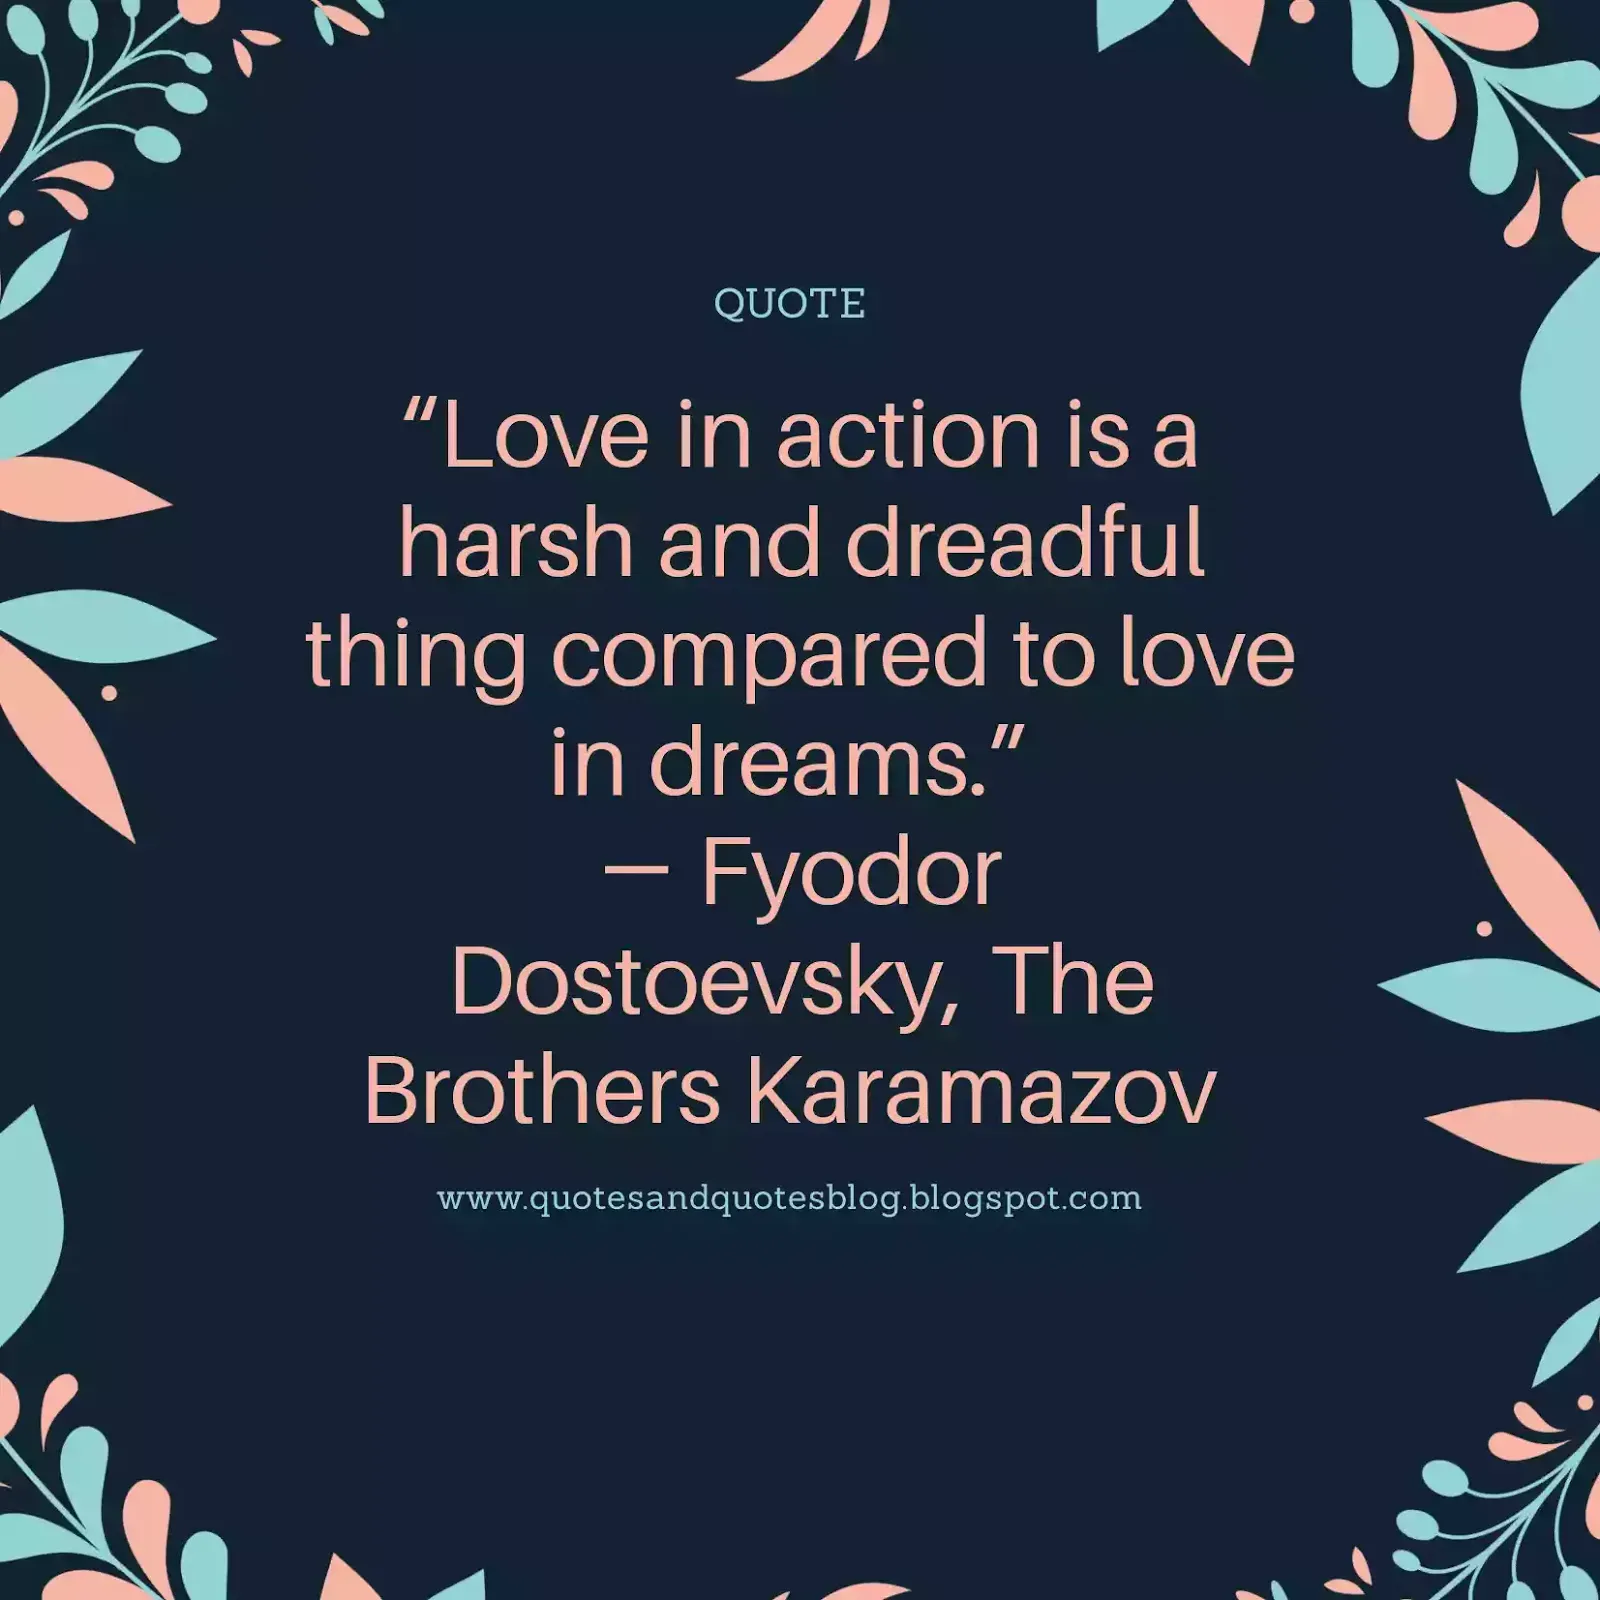 <img src=”sad quotes about love and life.jpg” alt=”sad quote about love and life by fyodor dostoevsky www.quotesandquotesblog.blogspot.com”>